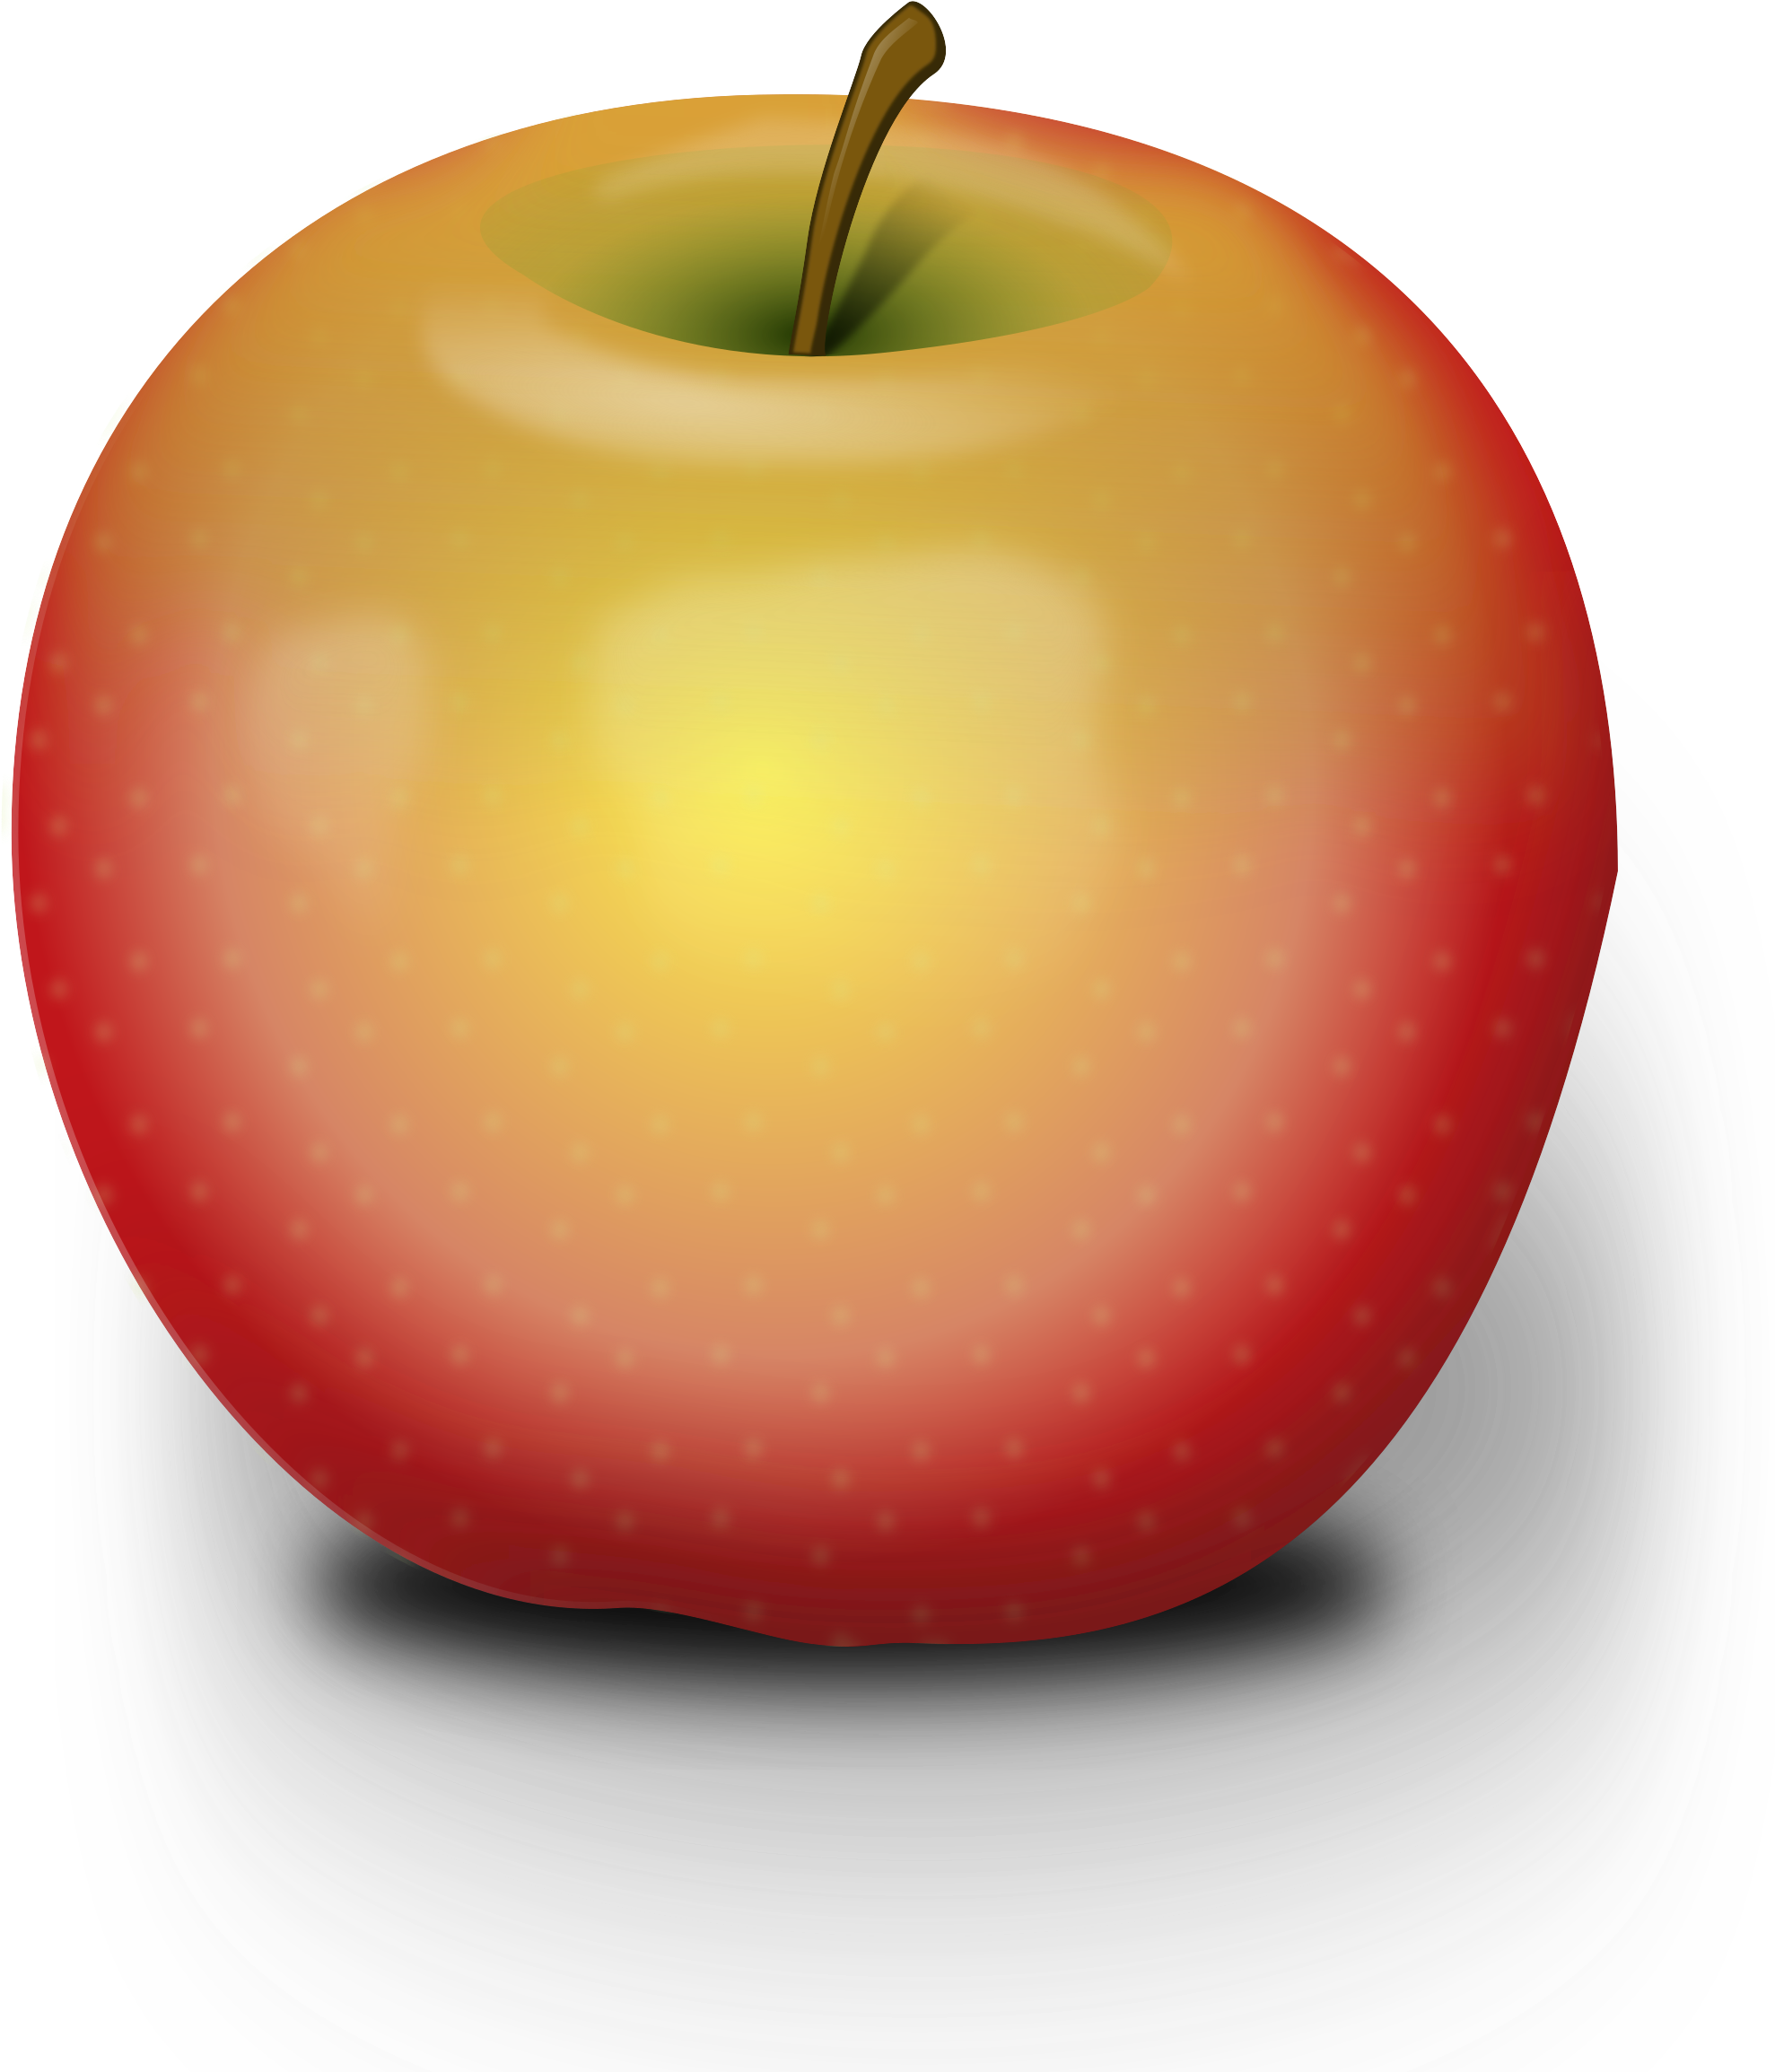 Apple Fruit Clipart Large Apple Clipart Green Apple